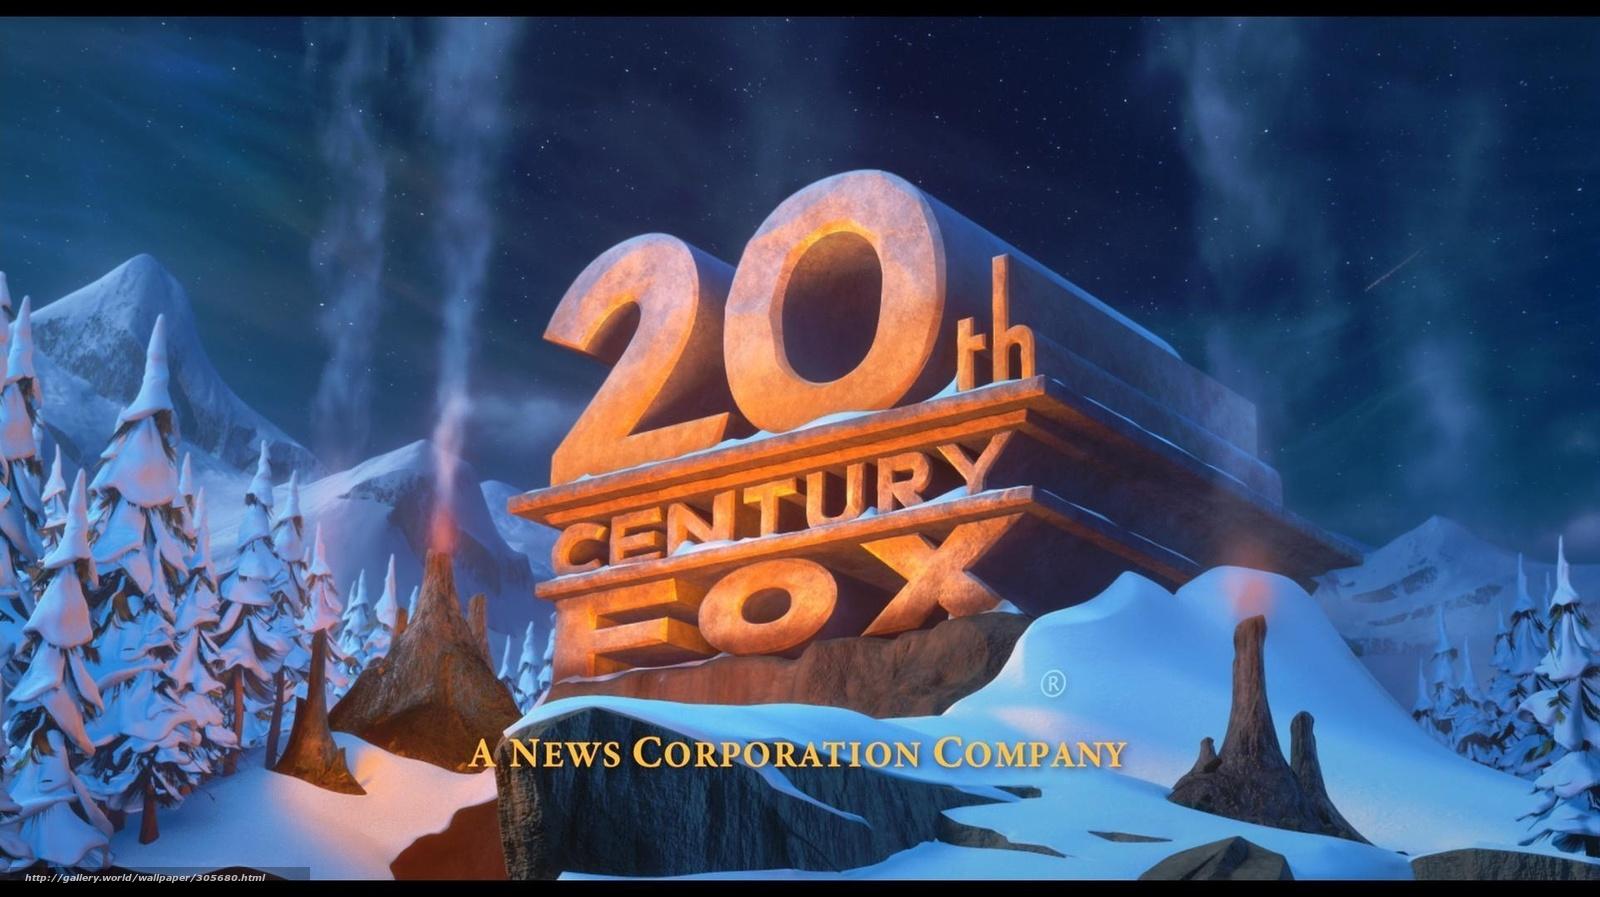 Download wallpapers 20th century fox, Film, logo, snow free desktop